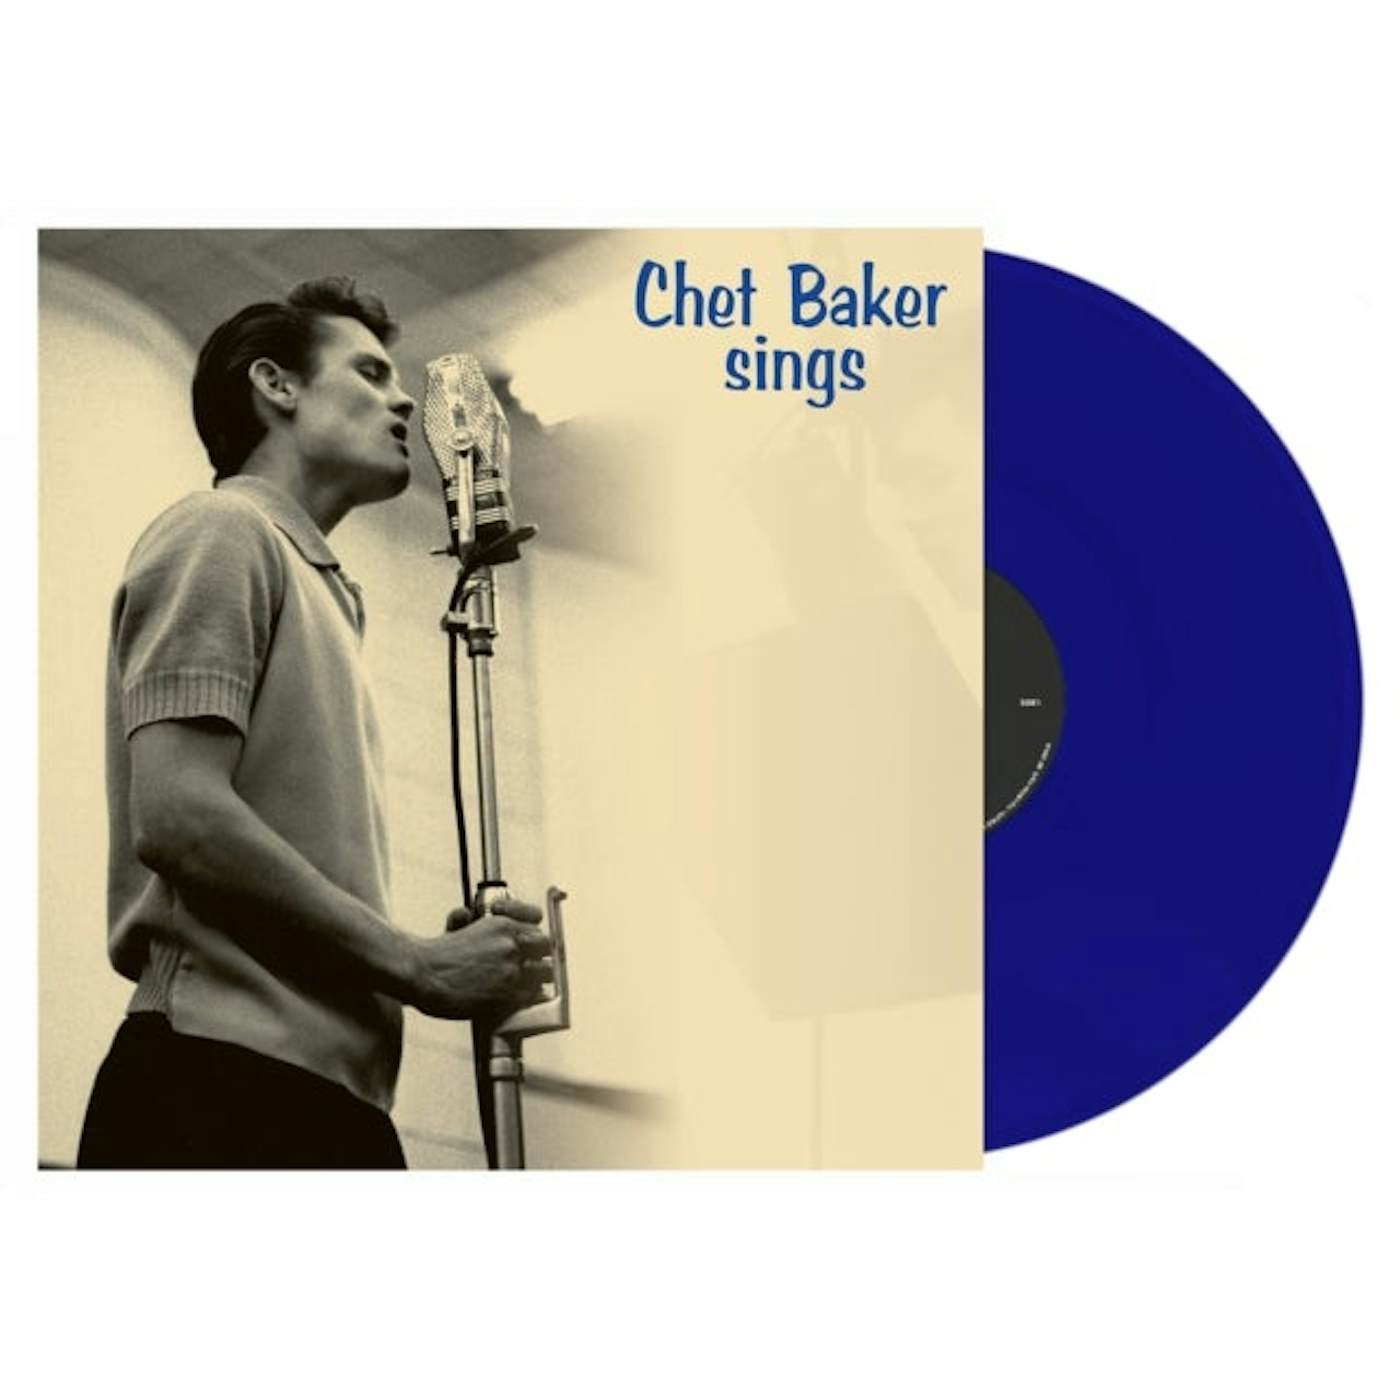 Chet Baker LP Vinyl Record - Sings (Royal Blue Vinyl)